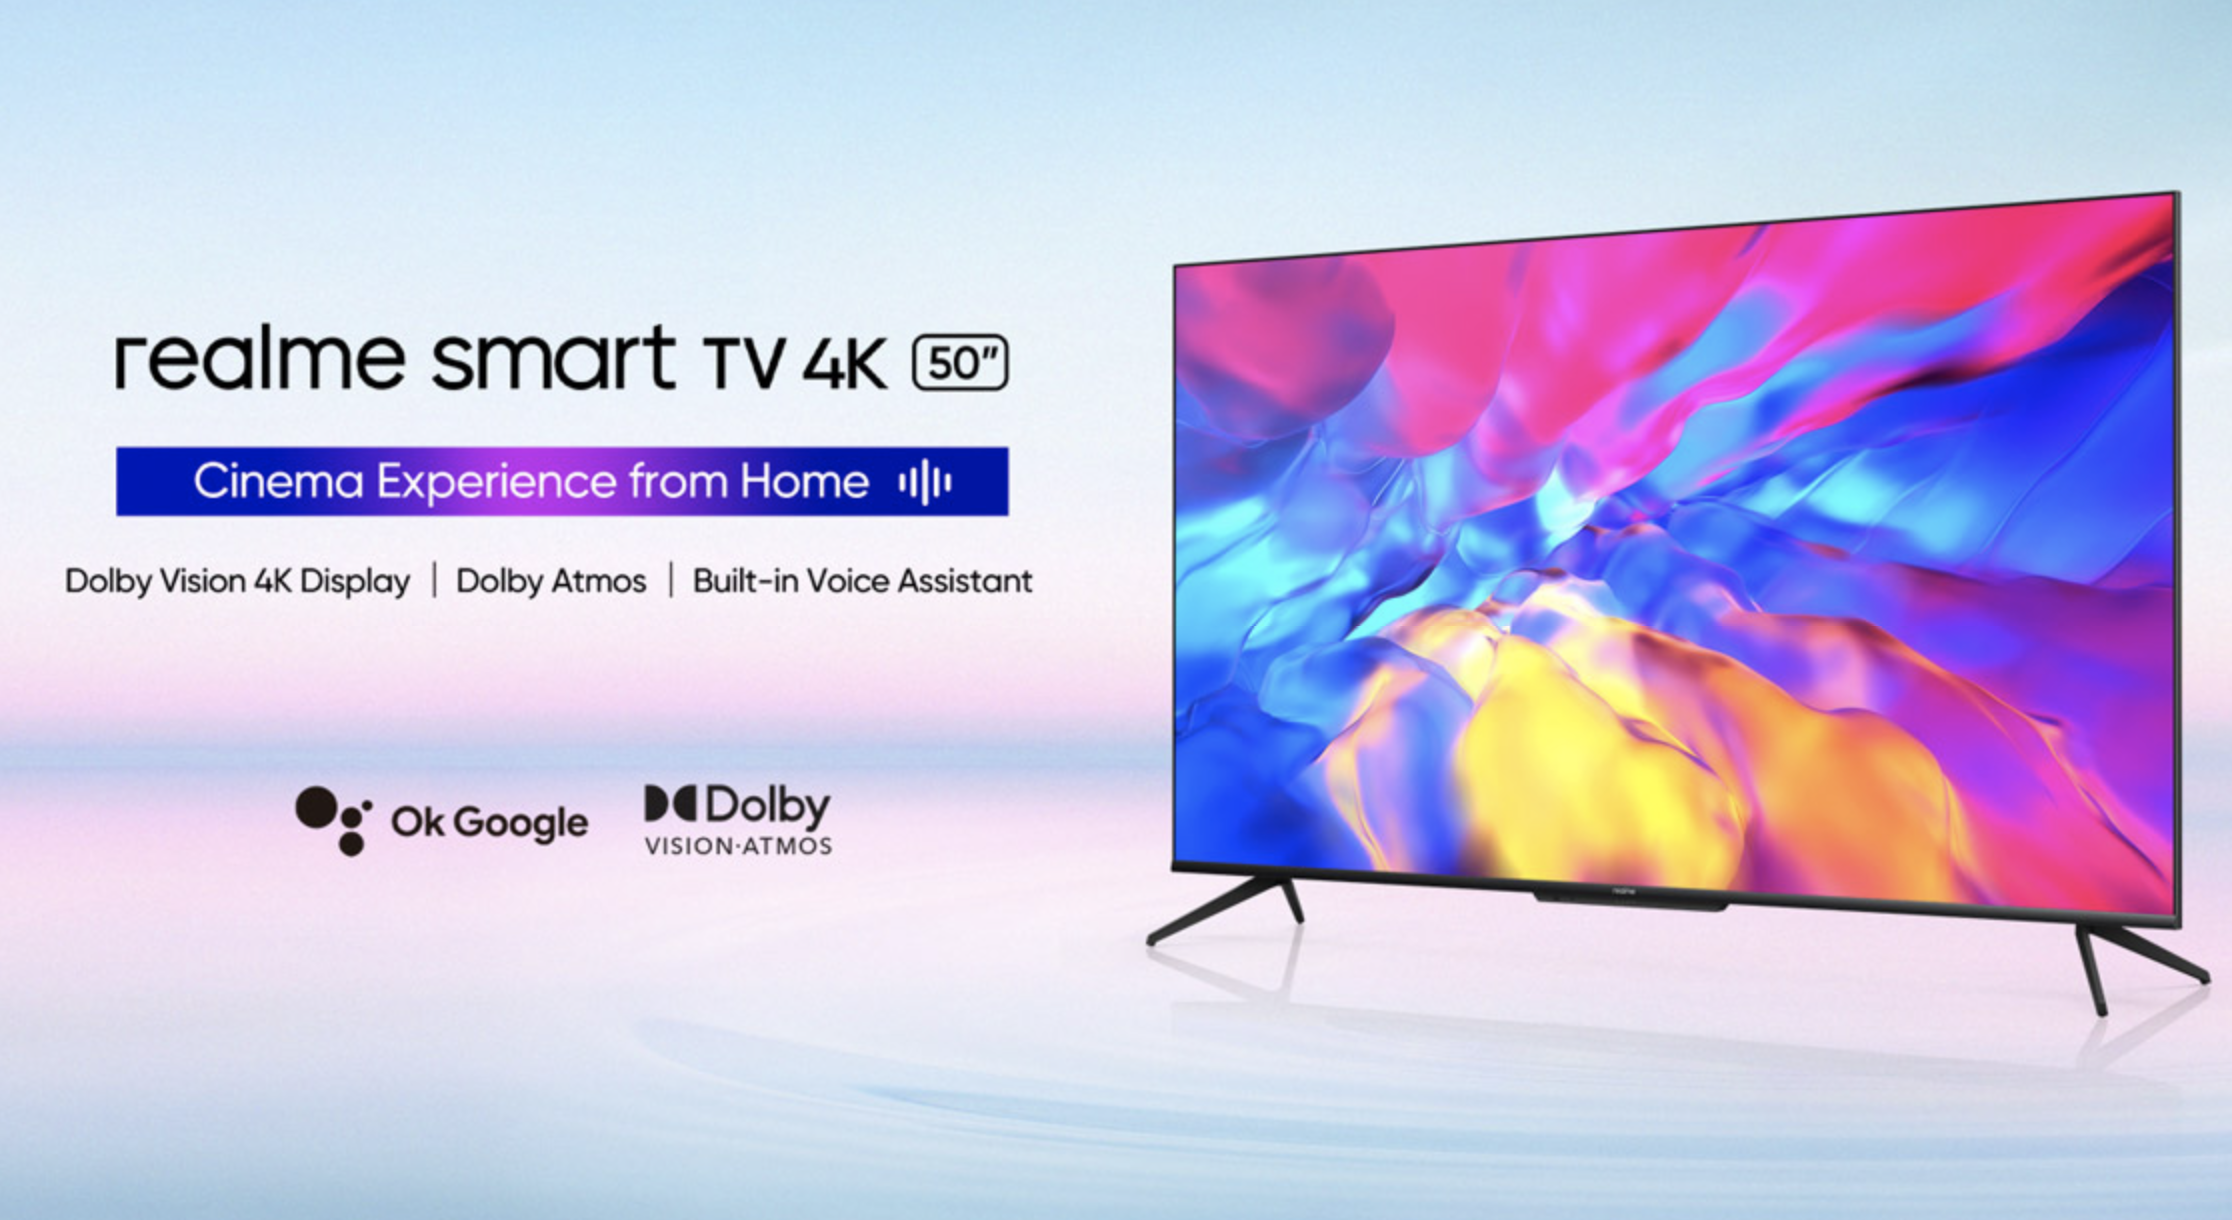 Harga da Spesifikasi Smart TV Realme